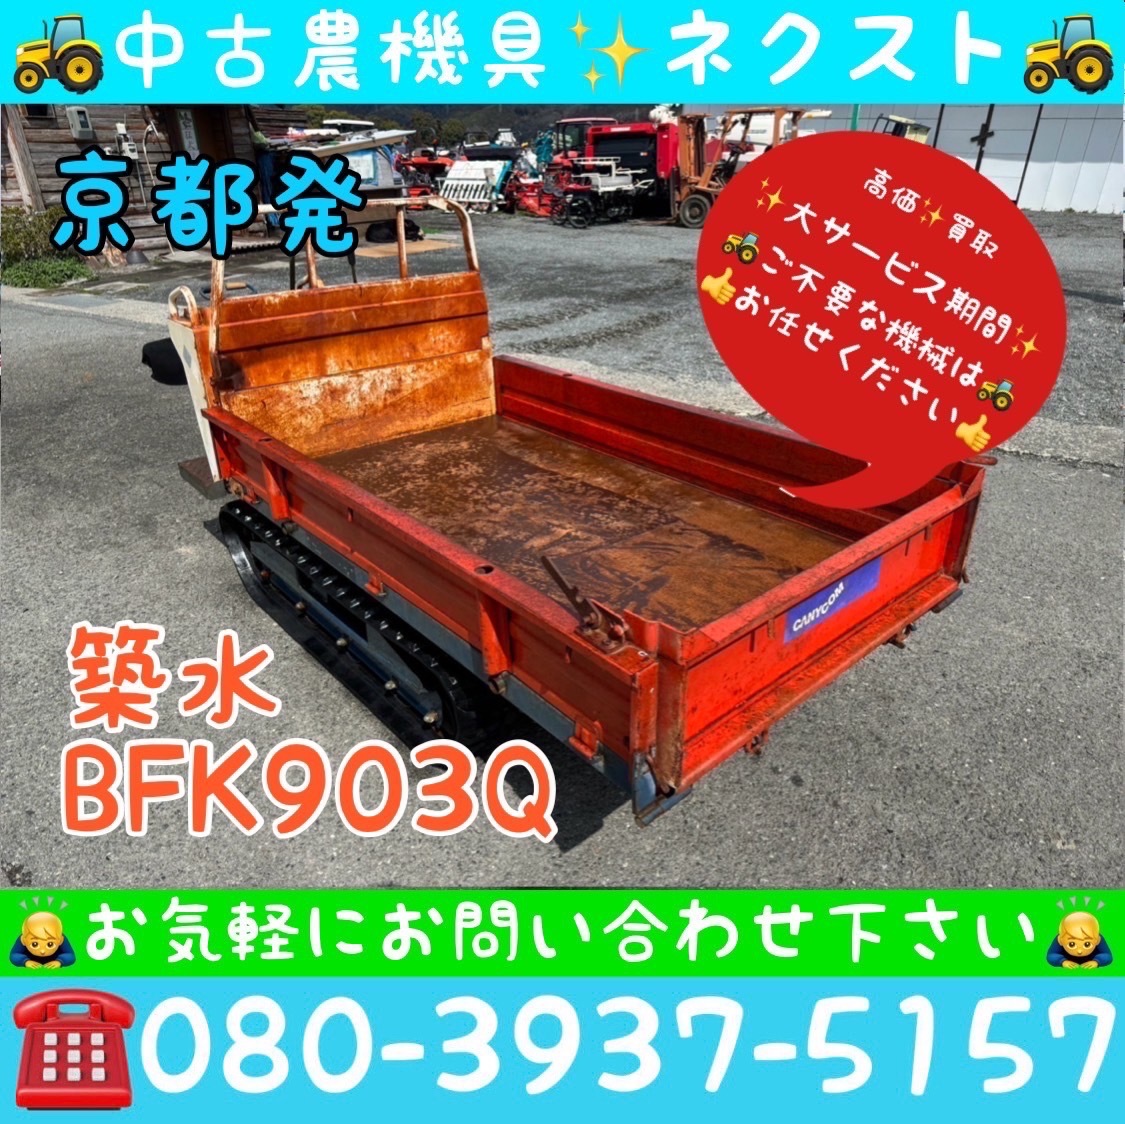 . water BFK903Q oil pressure dump transportation car Kyoto departure 